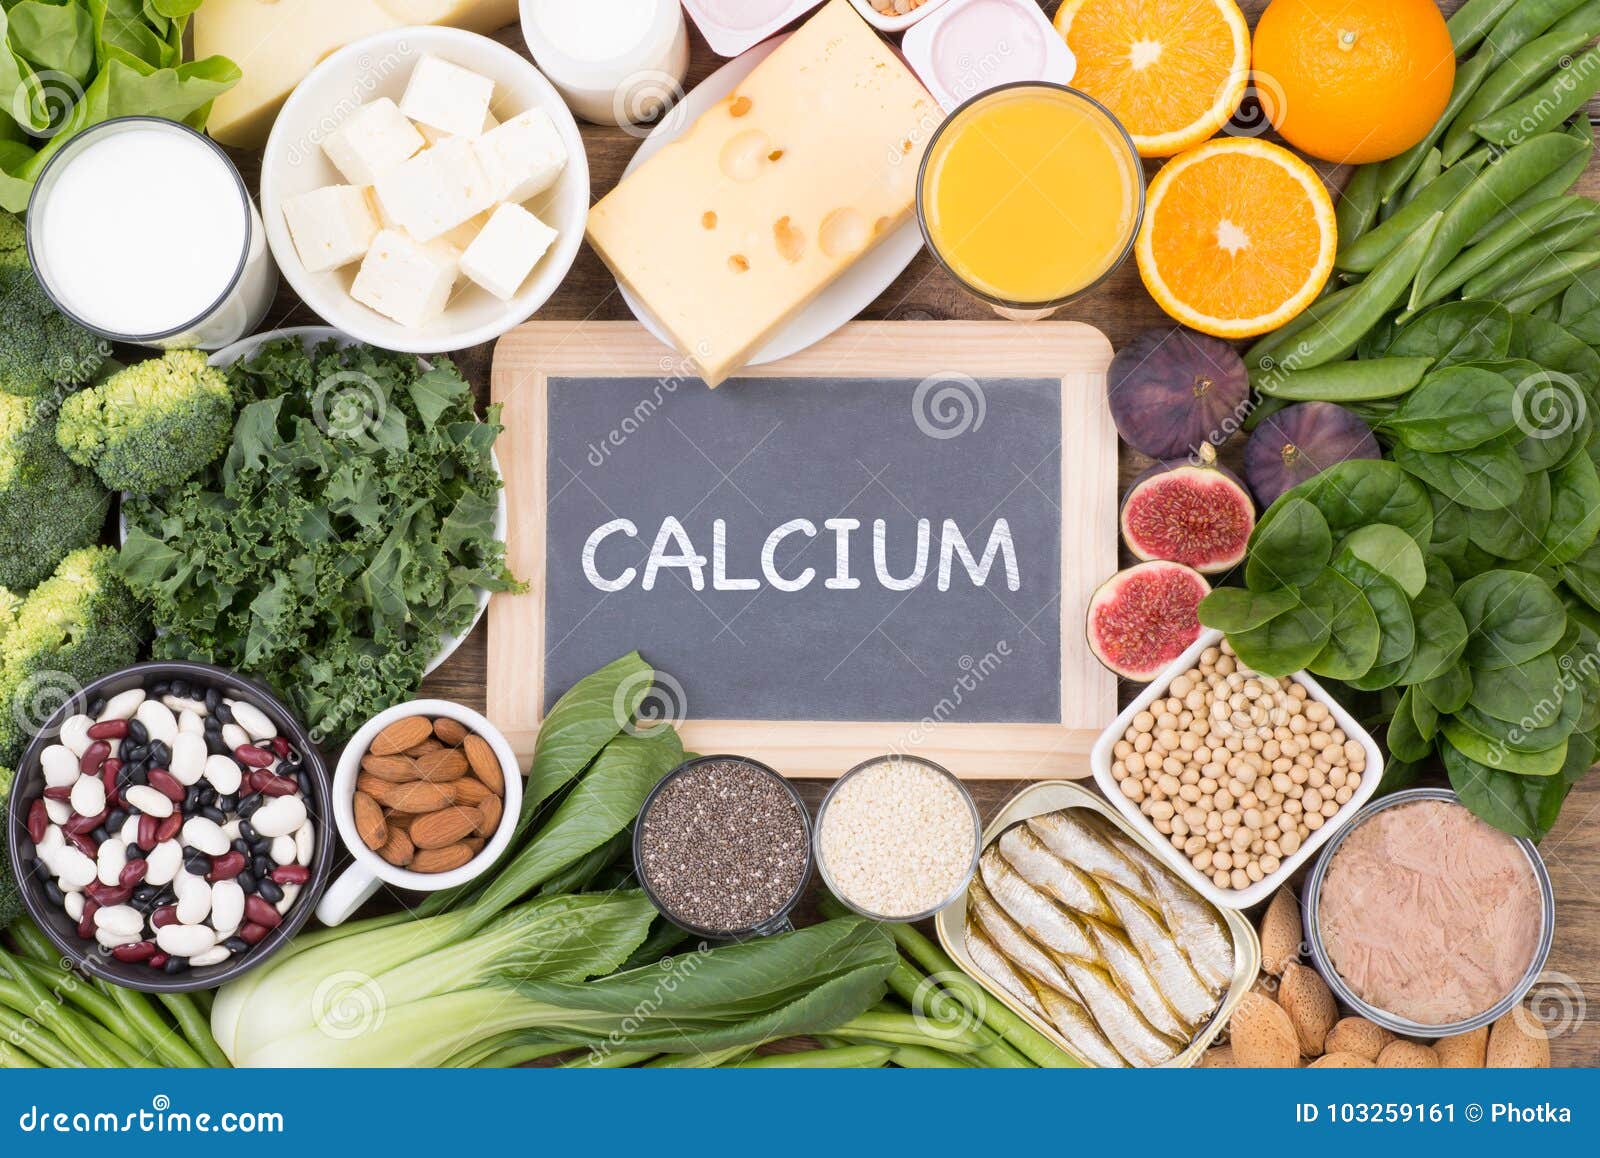 calcium food sources, top view